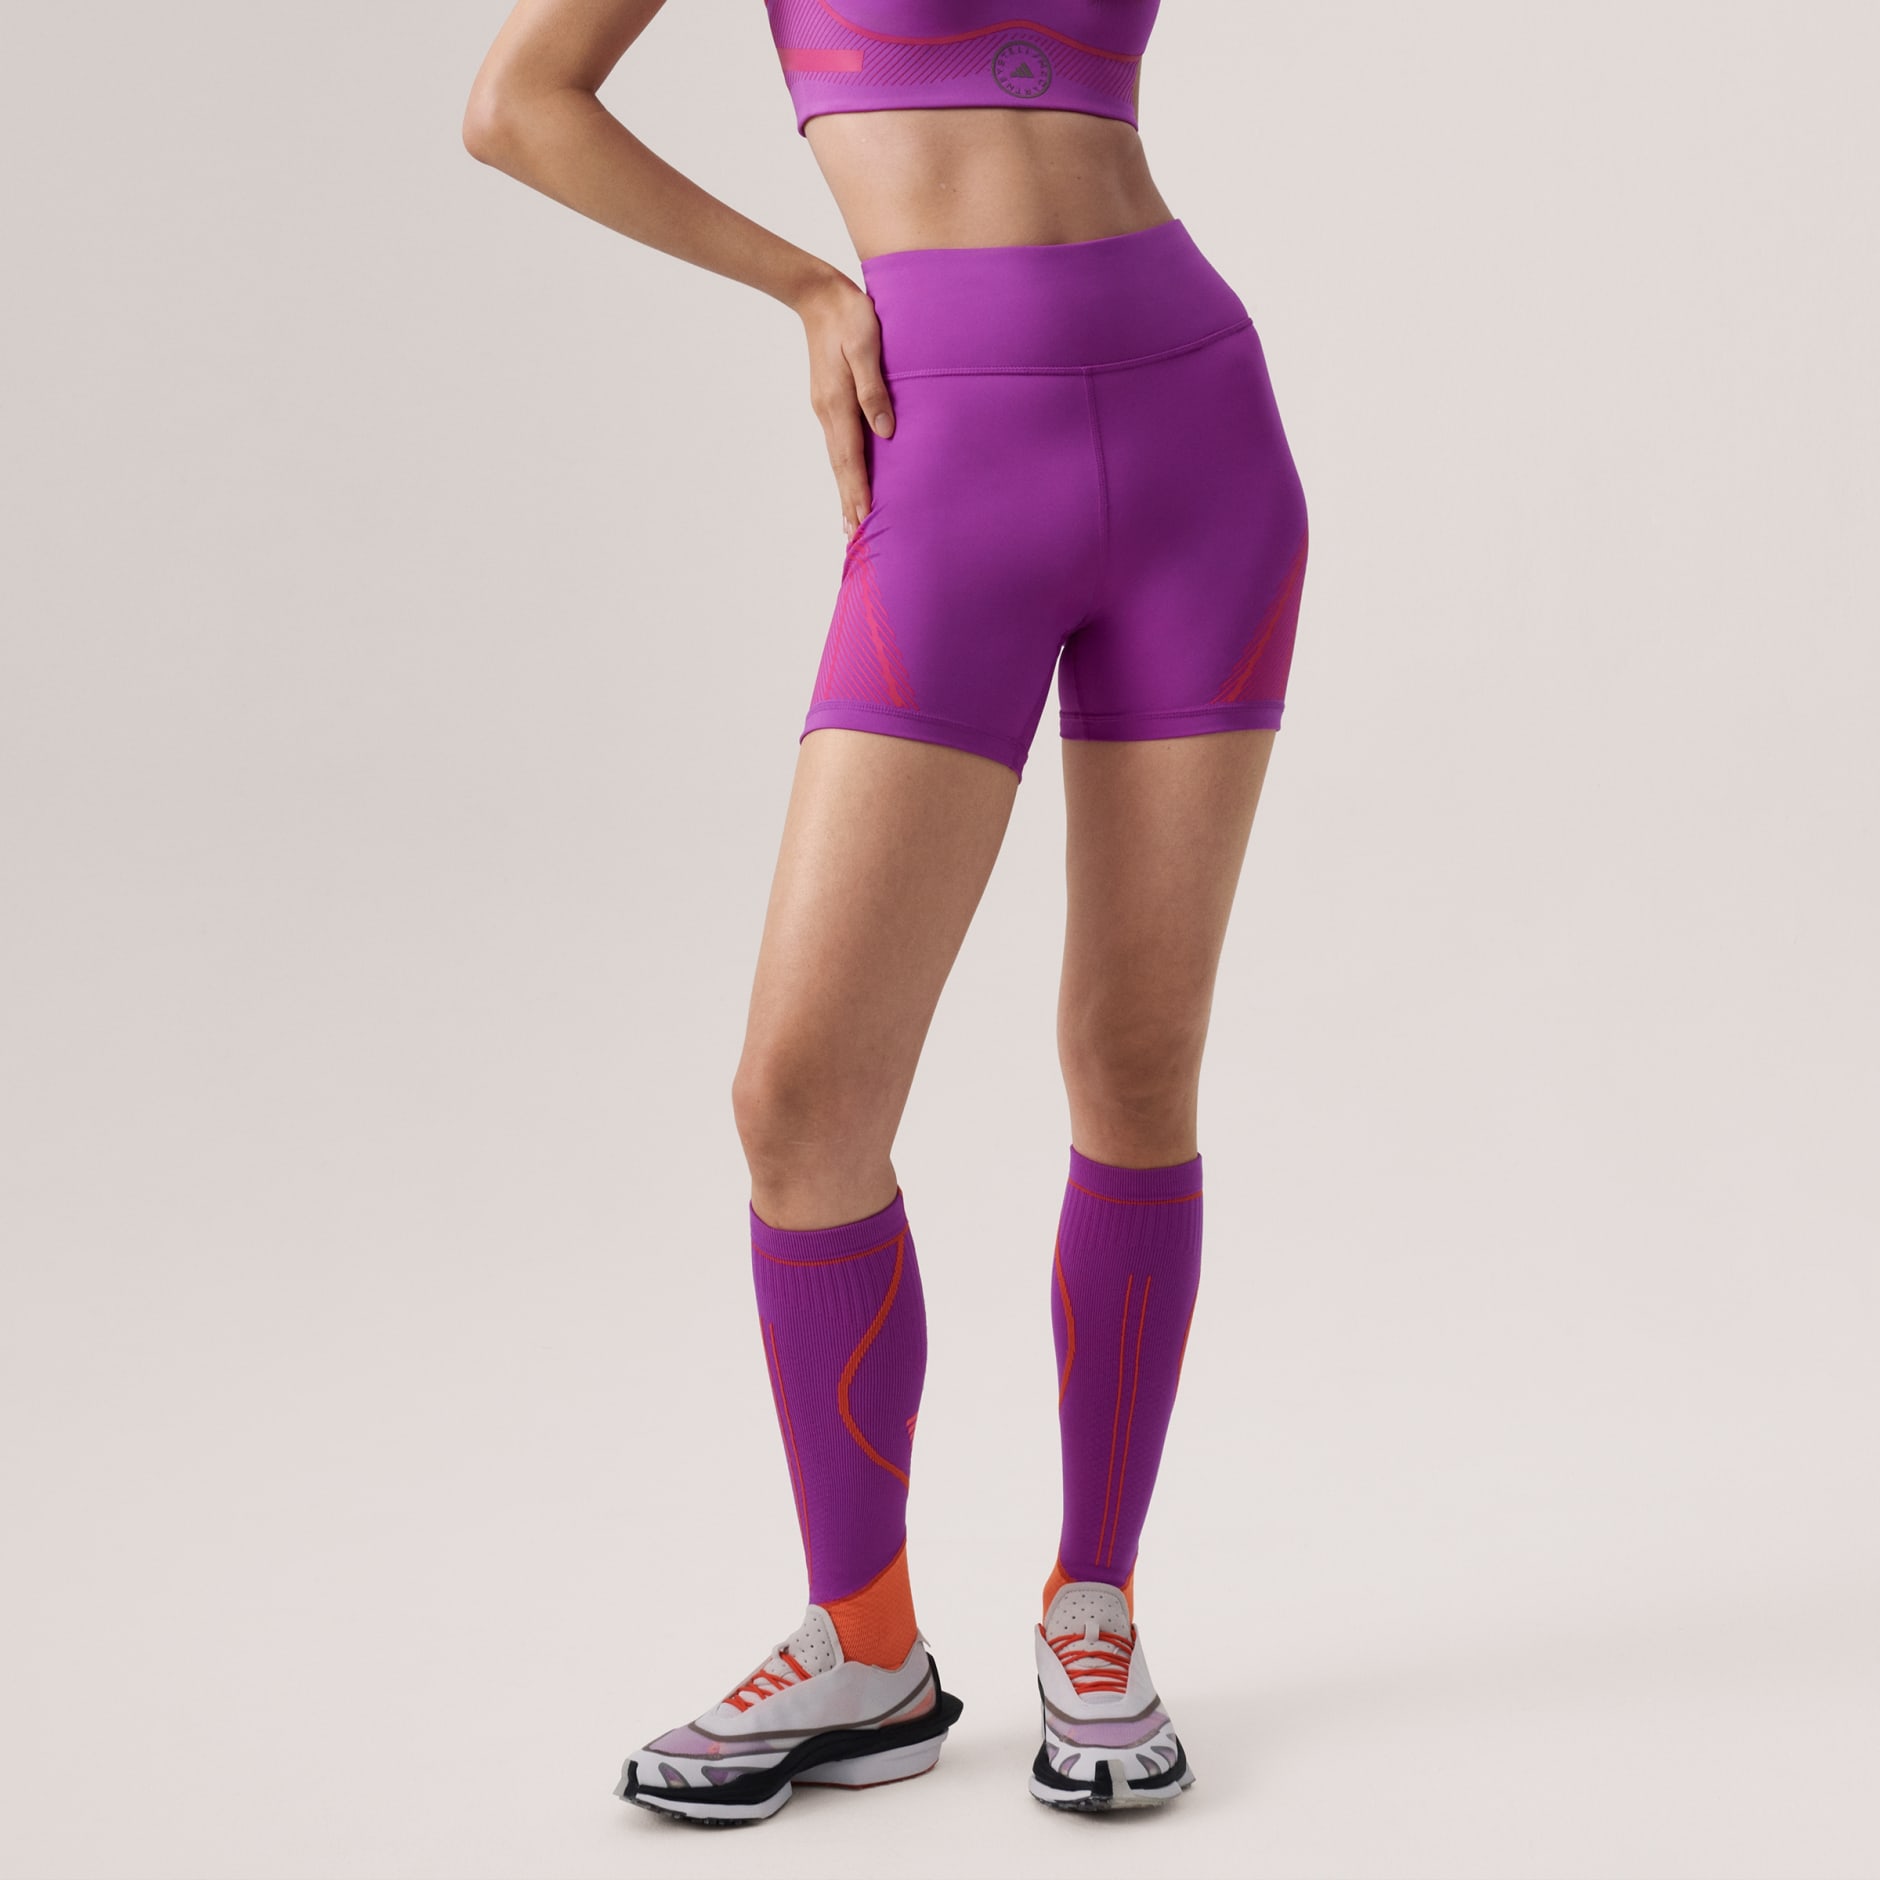 TruePace shorts in purple - Adidas By Stella Mc Cartney